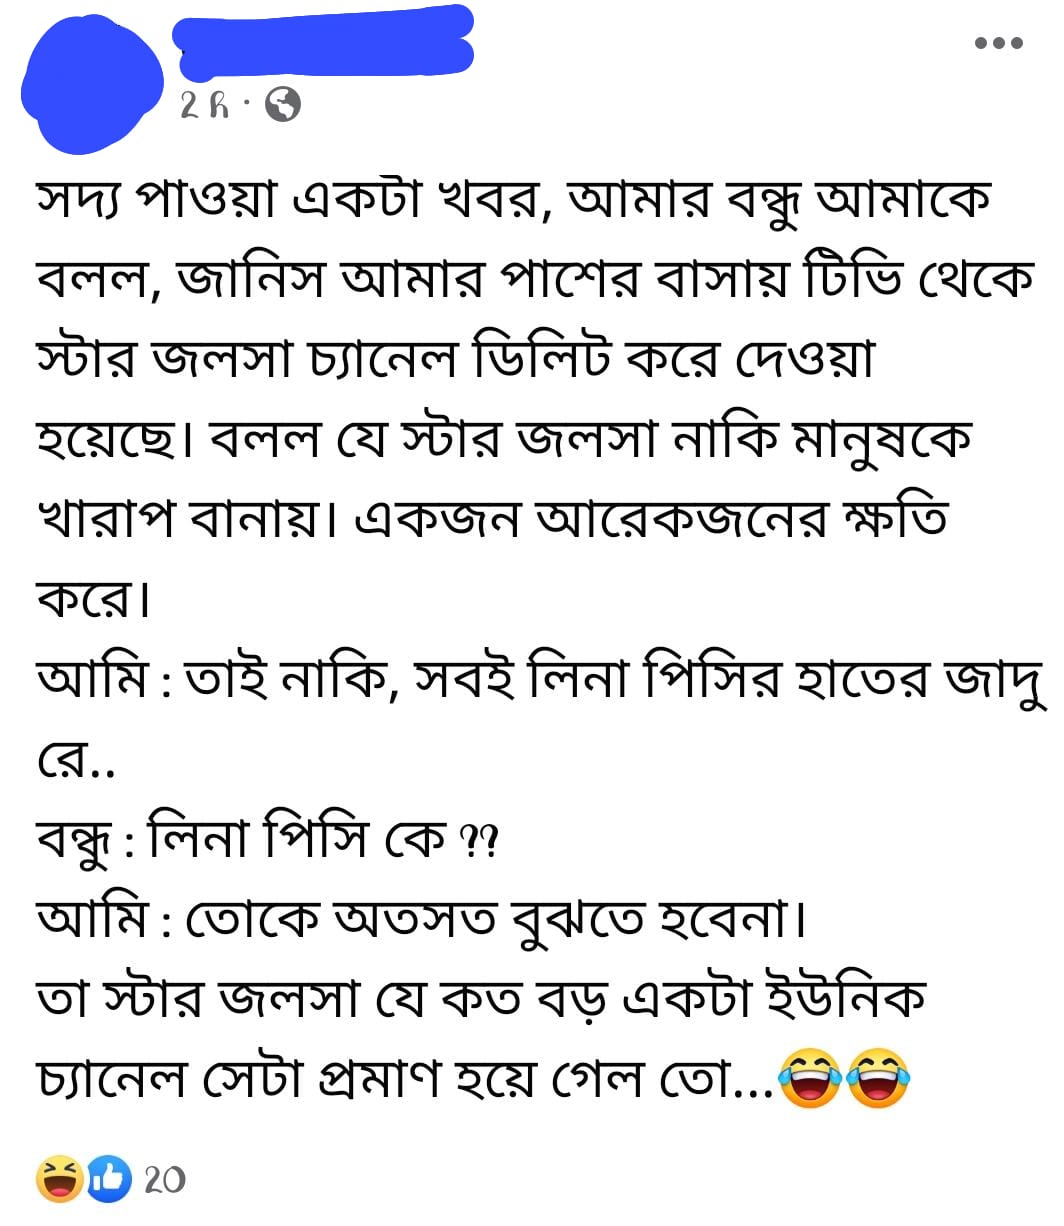 Bengali channel